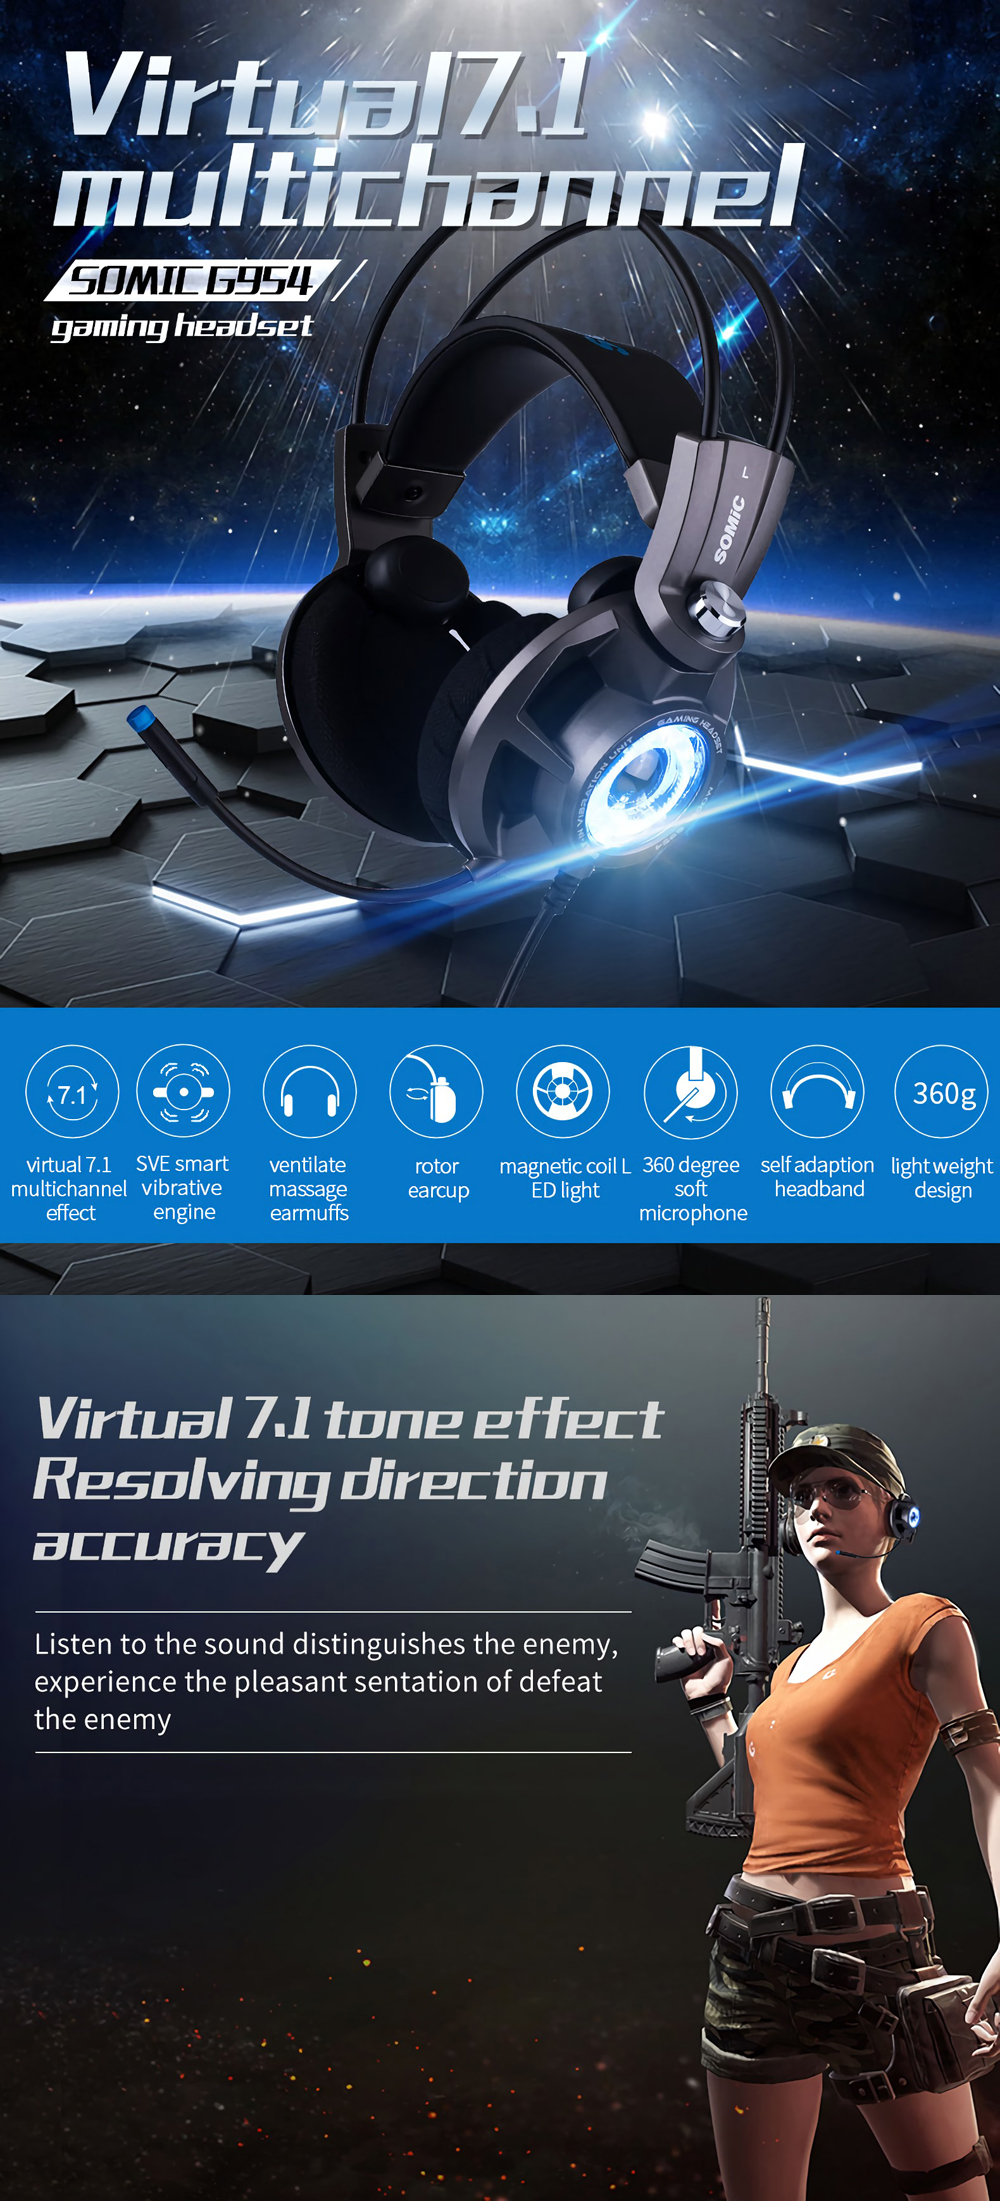 SOMiC G954 USB Wired Virtual 7.1 Surround Sound SVE Vibration Gaming Headphone Headset 5